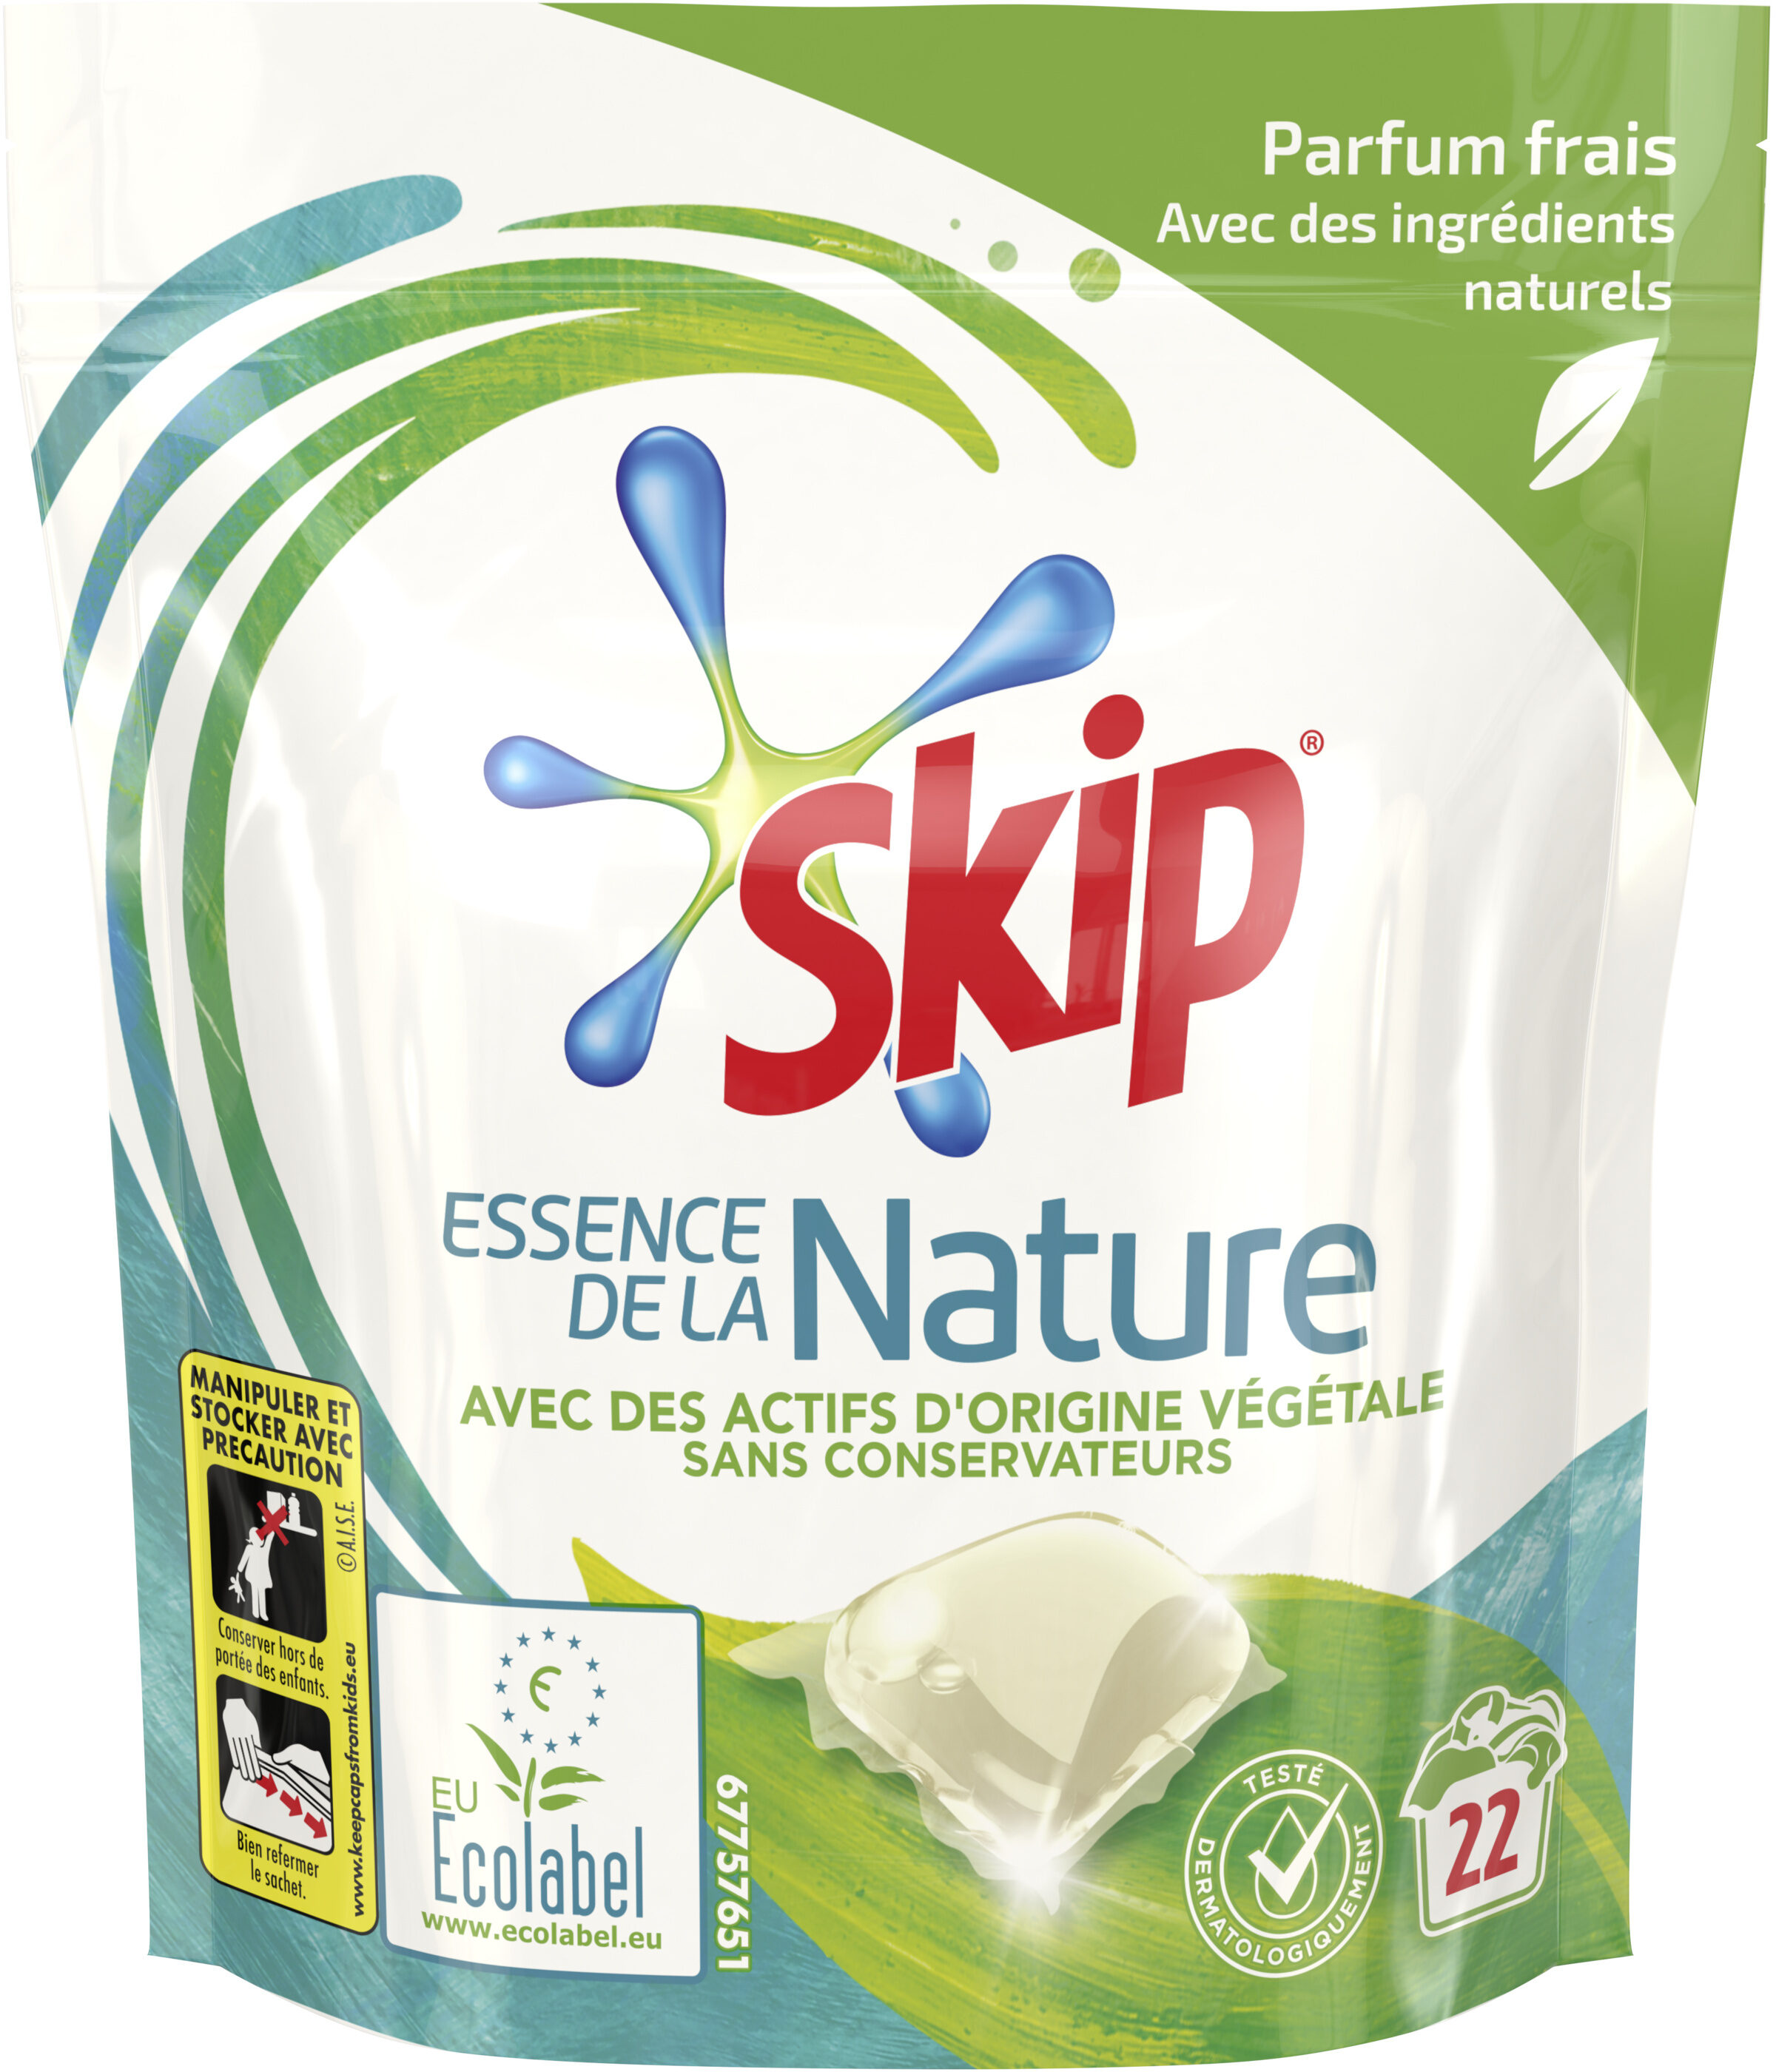 Skip Lessive Capsules Essence de la Nature 22 capsules - Product - fr